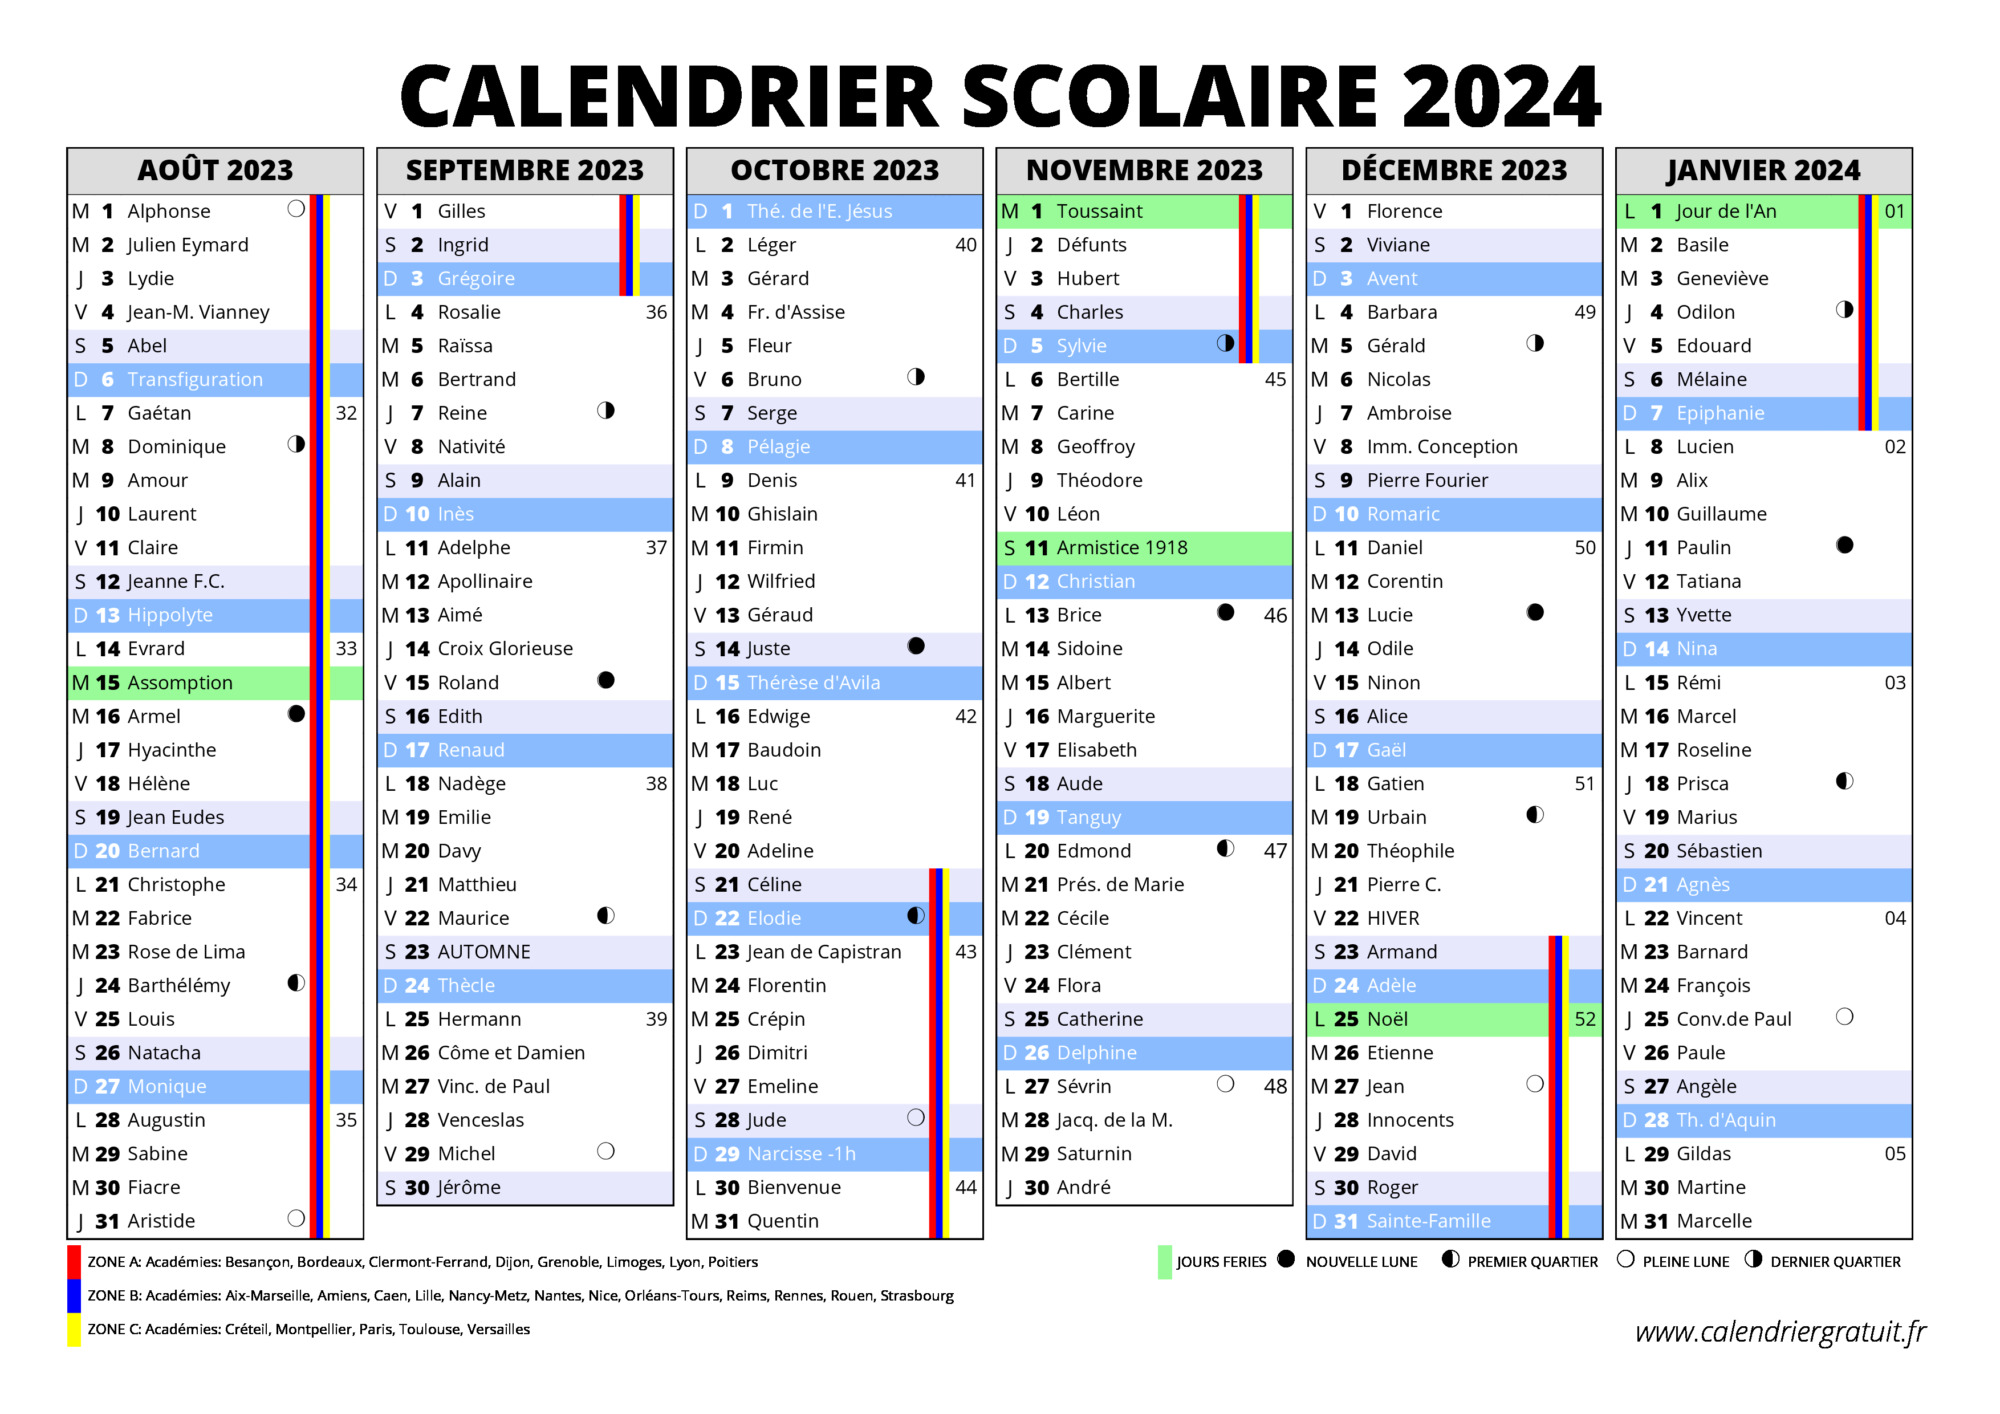 Calendrier 2024 - Calendrier 2023-2024, Sep. 2023 - Liban